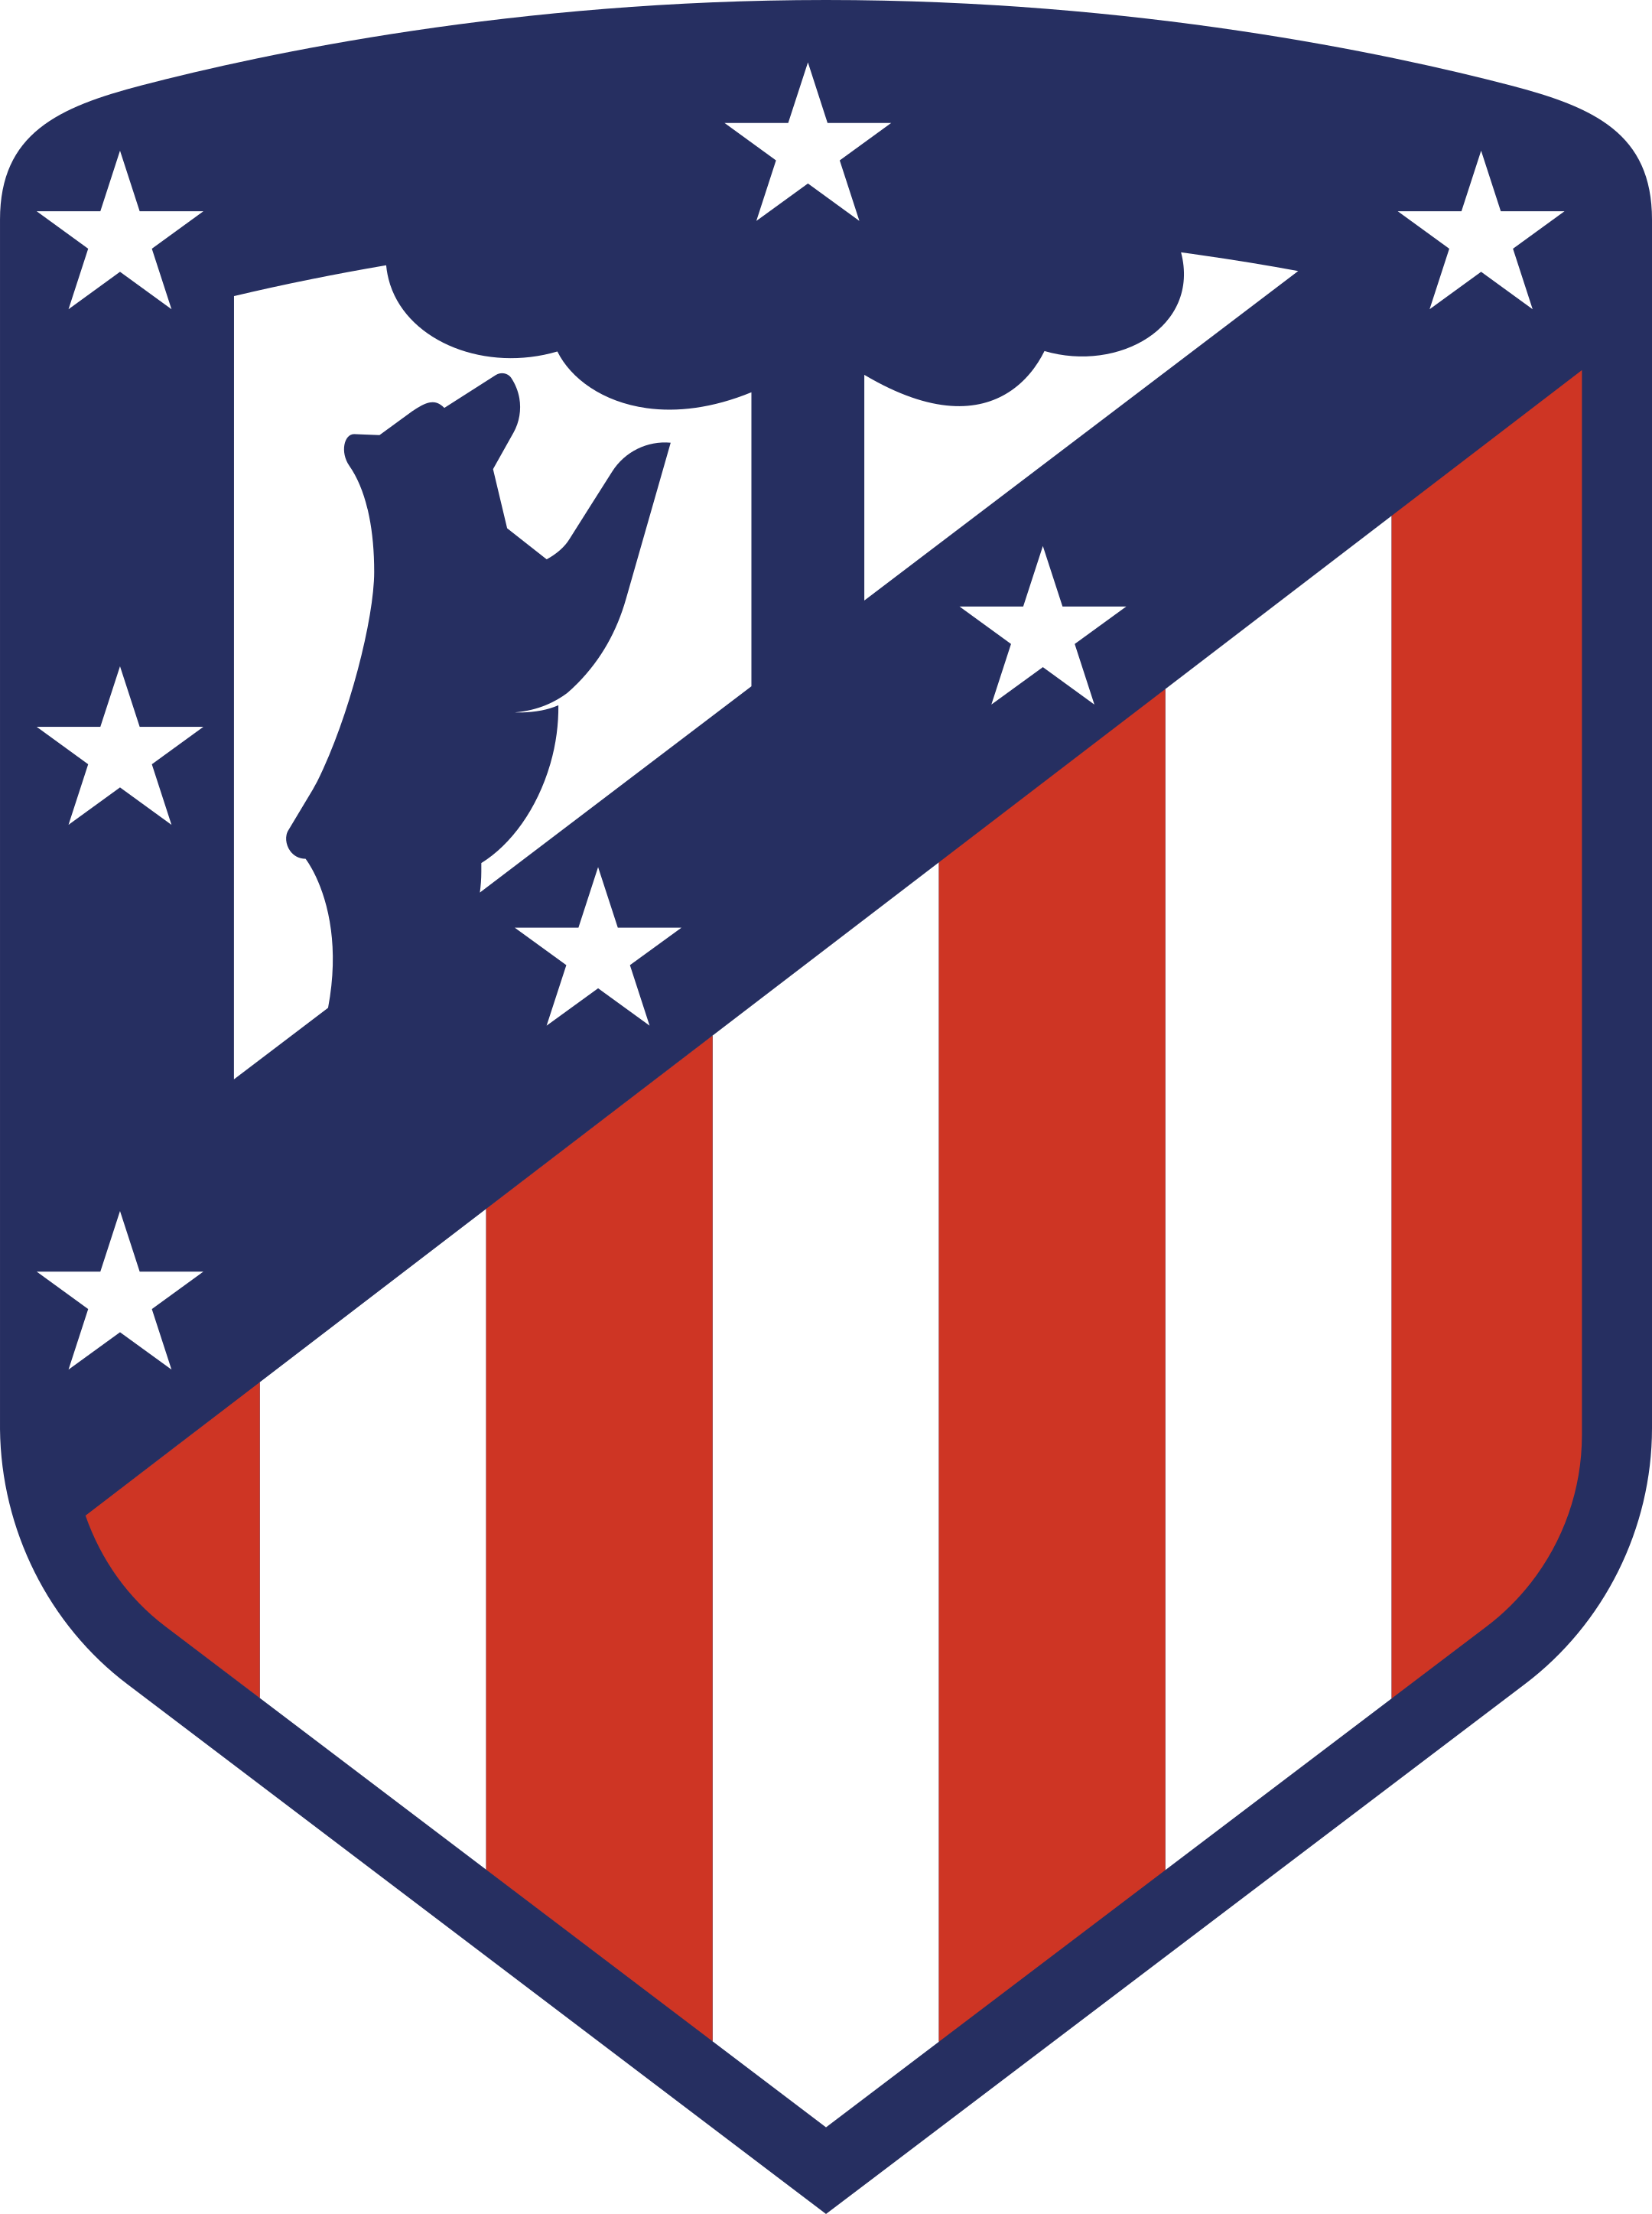 atletico madrid logo 1 1 - Atlético de Madrid Logo